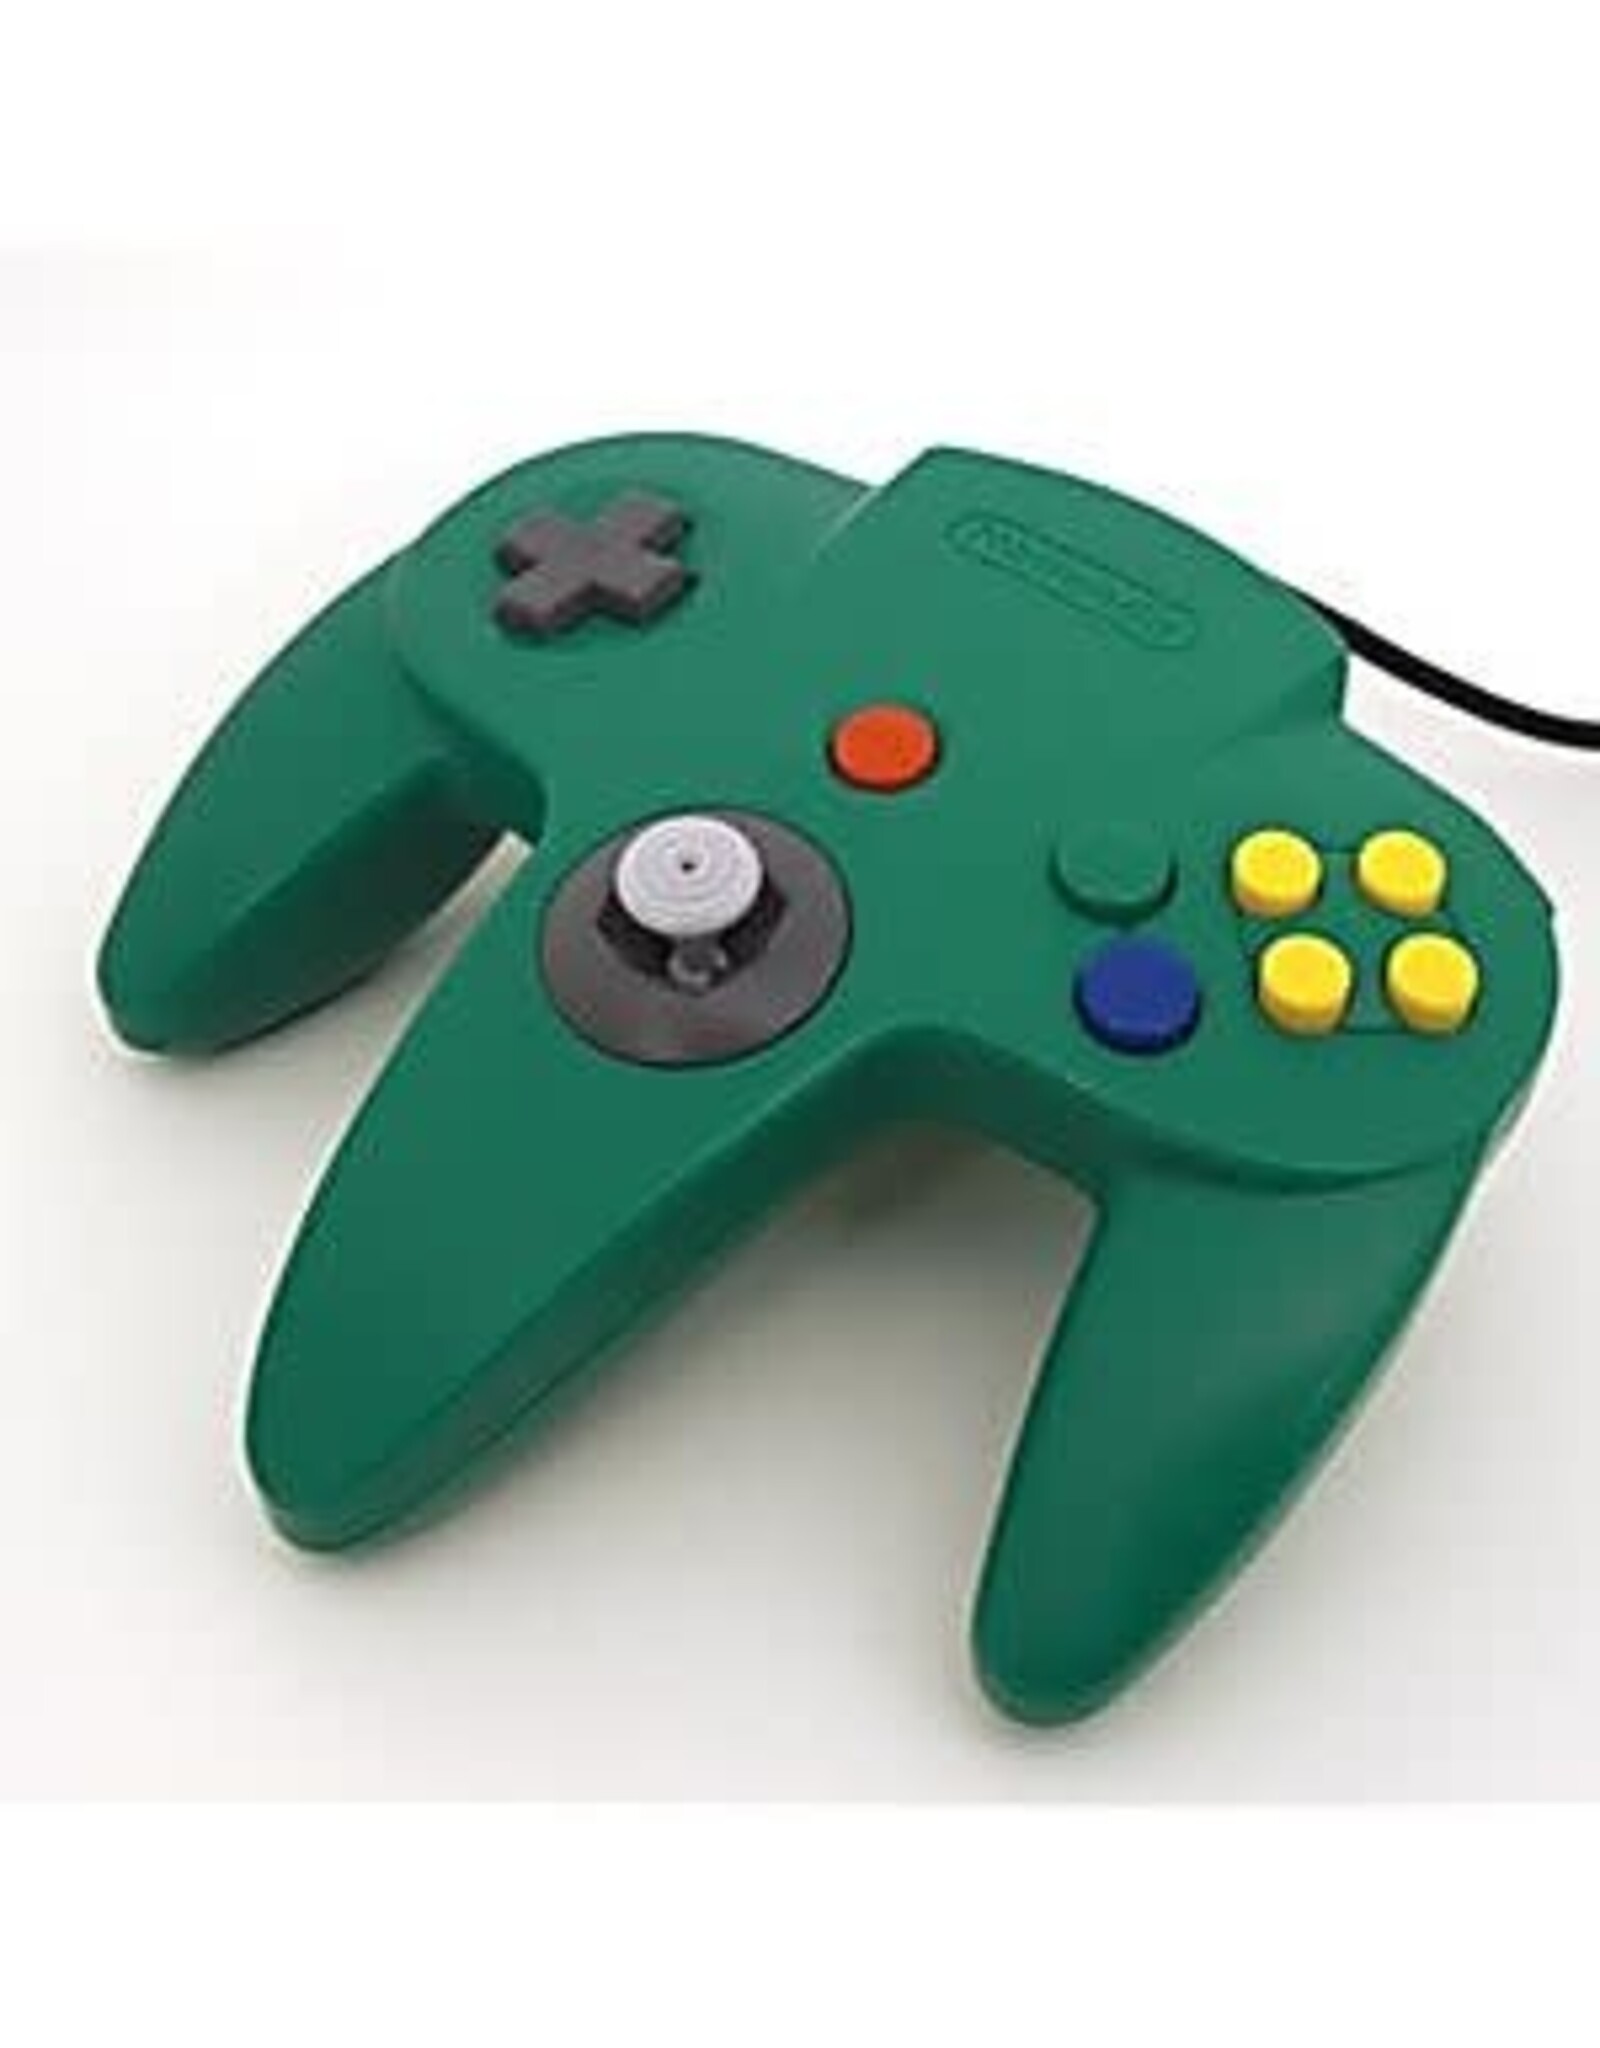 Nintendo 64 N64 Nintendo 64 Controller with New Joystick- Green, OEM (Used)